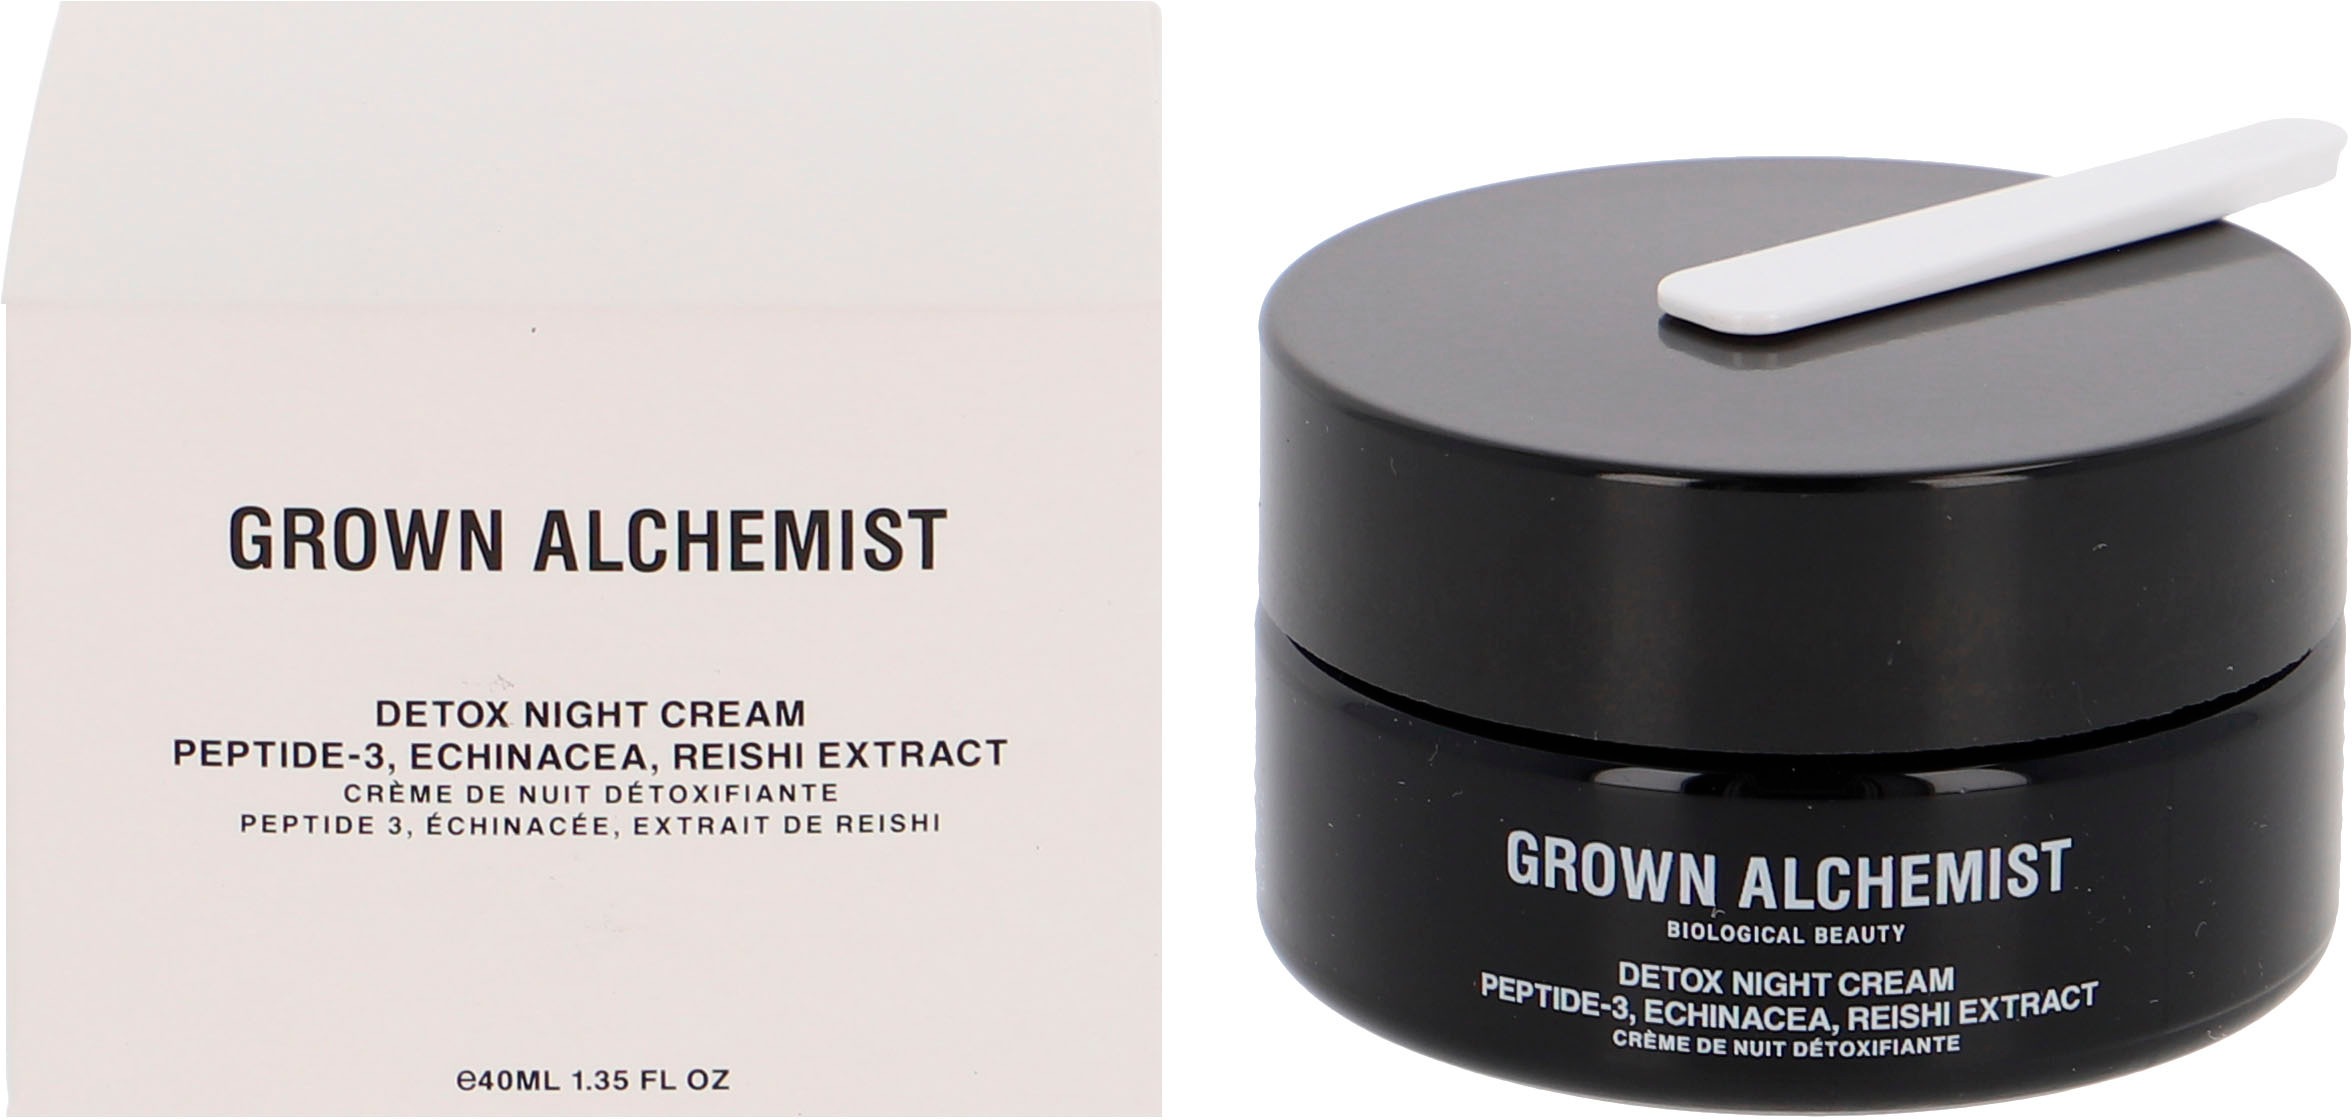 Friday Nachtcreme Black Echinacea, Night »Detox Extract Reishi Cream«, Peptide-3, ALCHEMIST BAUR GROWN |